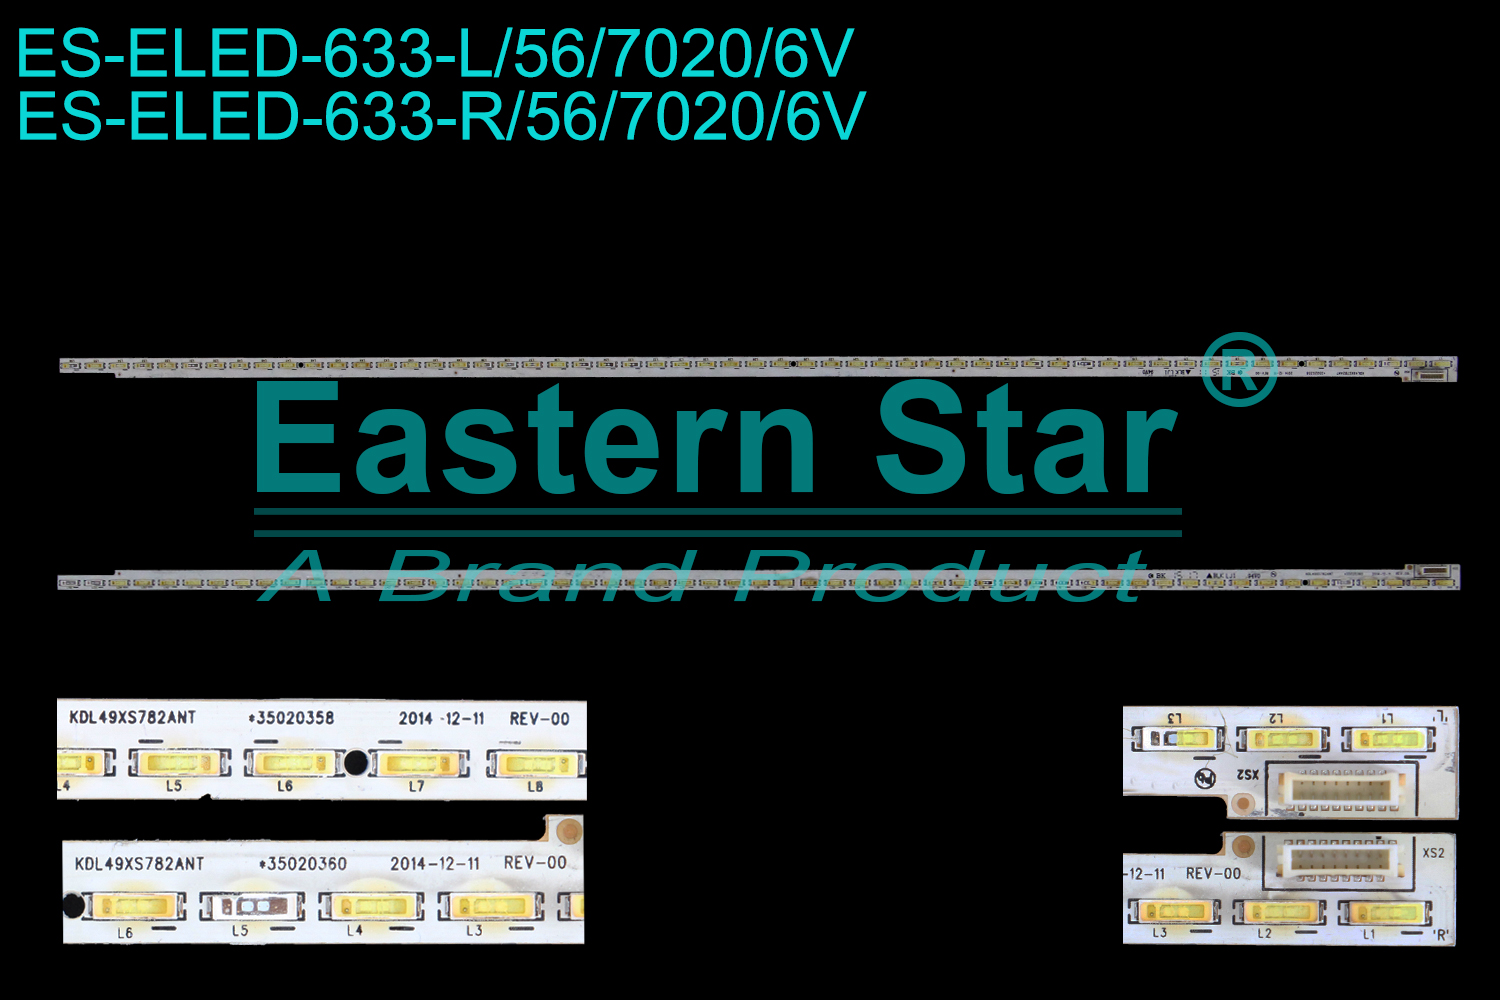 ES-ELED-633 ELED/EDGE TV backlight use for 49'' Konka LED50X2800U  L:KDL 49XS782ANT *35020358 2014-12-11 REV-00   R:KDL 49XS782ANT *35020360 2014-12-11  REV-00 LED STRIPS(2)